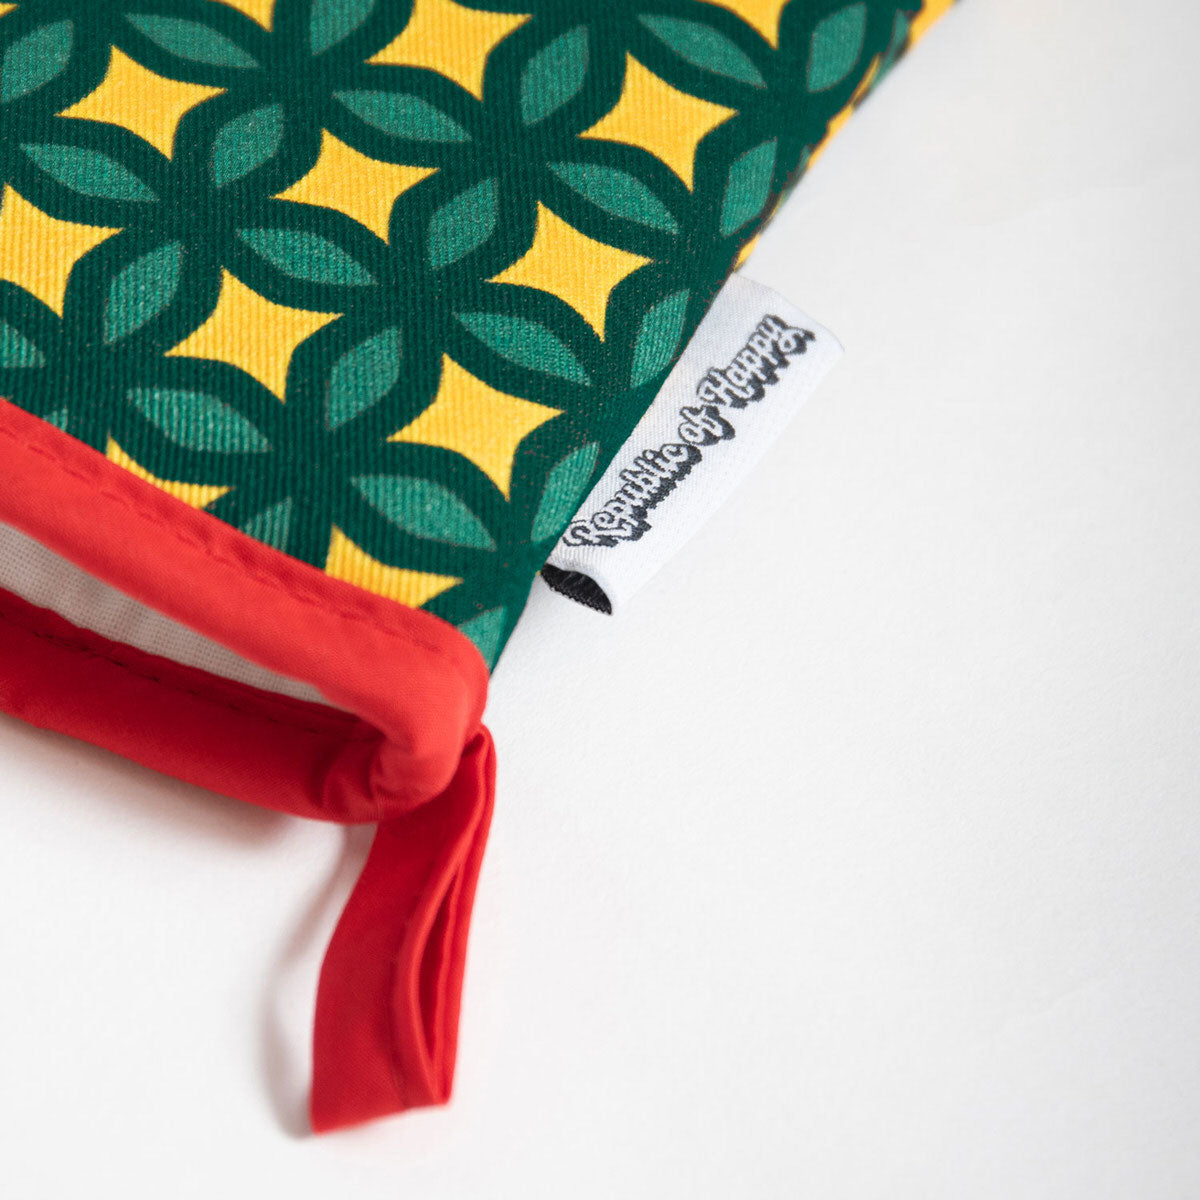 ARALIA LEAVES - Single oven glove with colourful geometric stars pattern